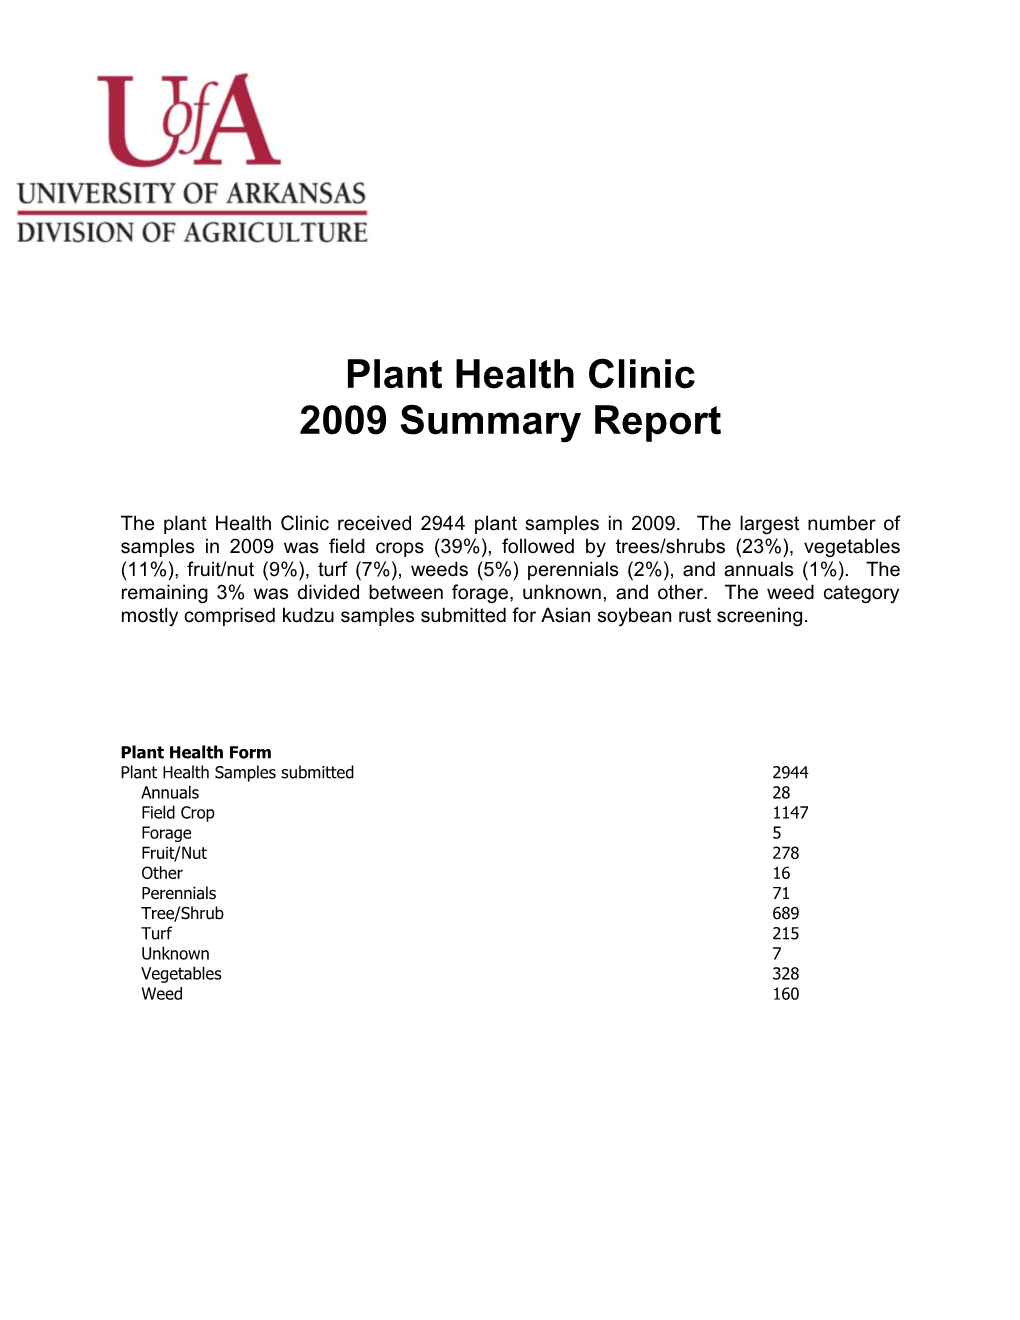 Plant Health Clinic 2009 Summary Report